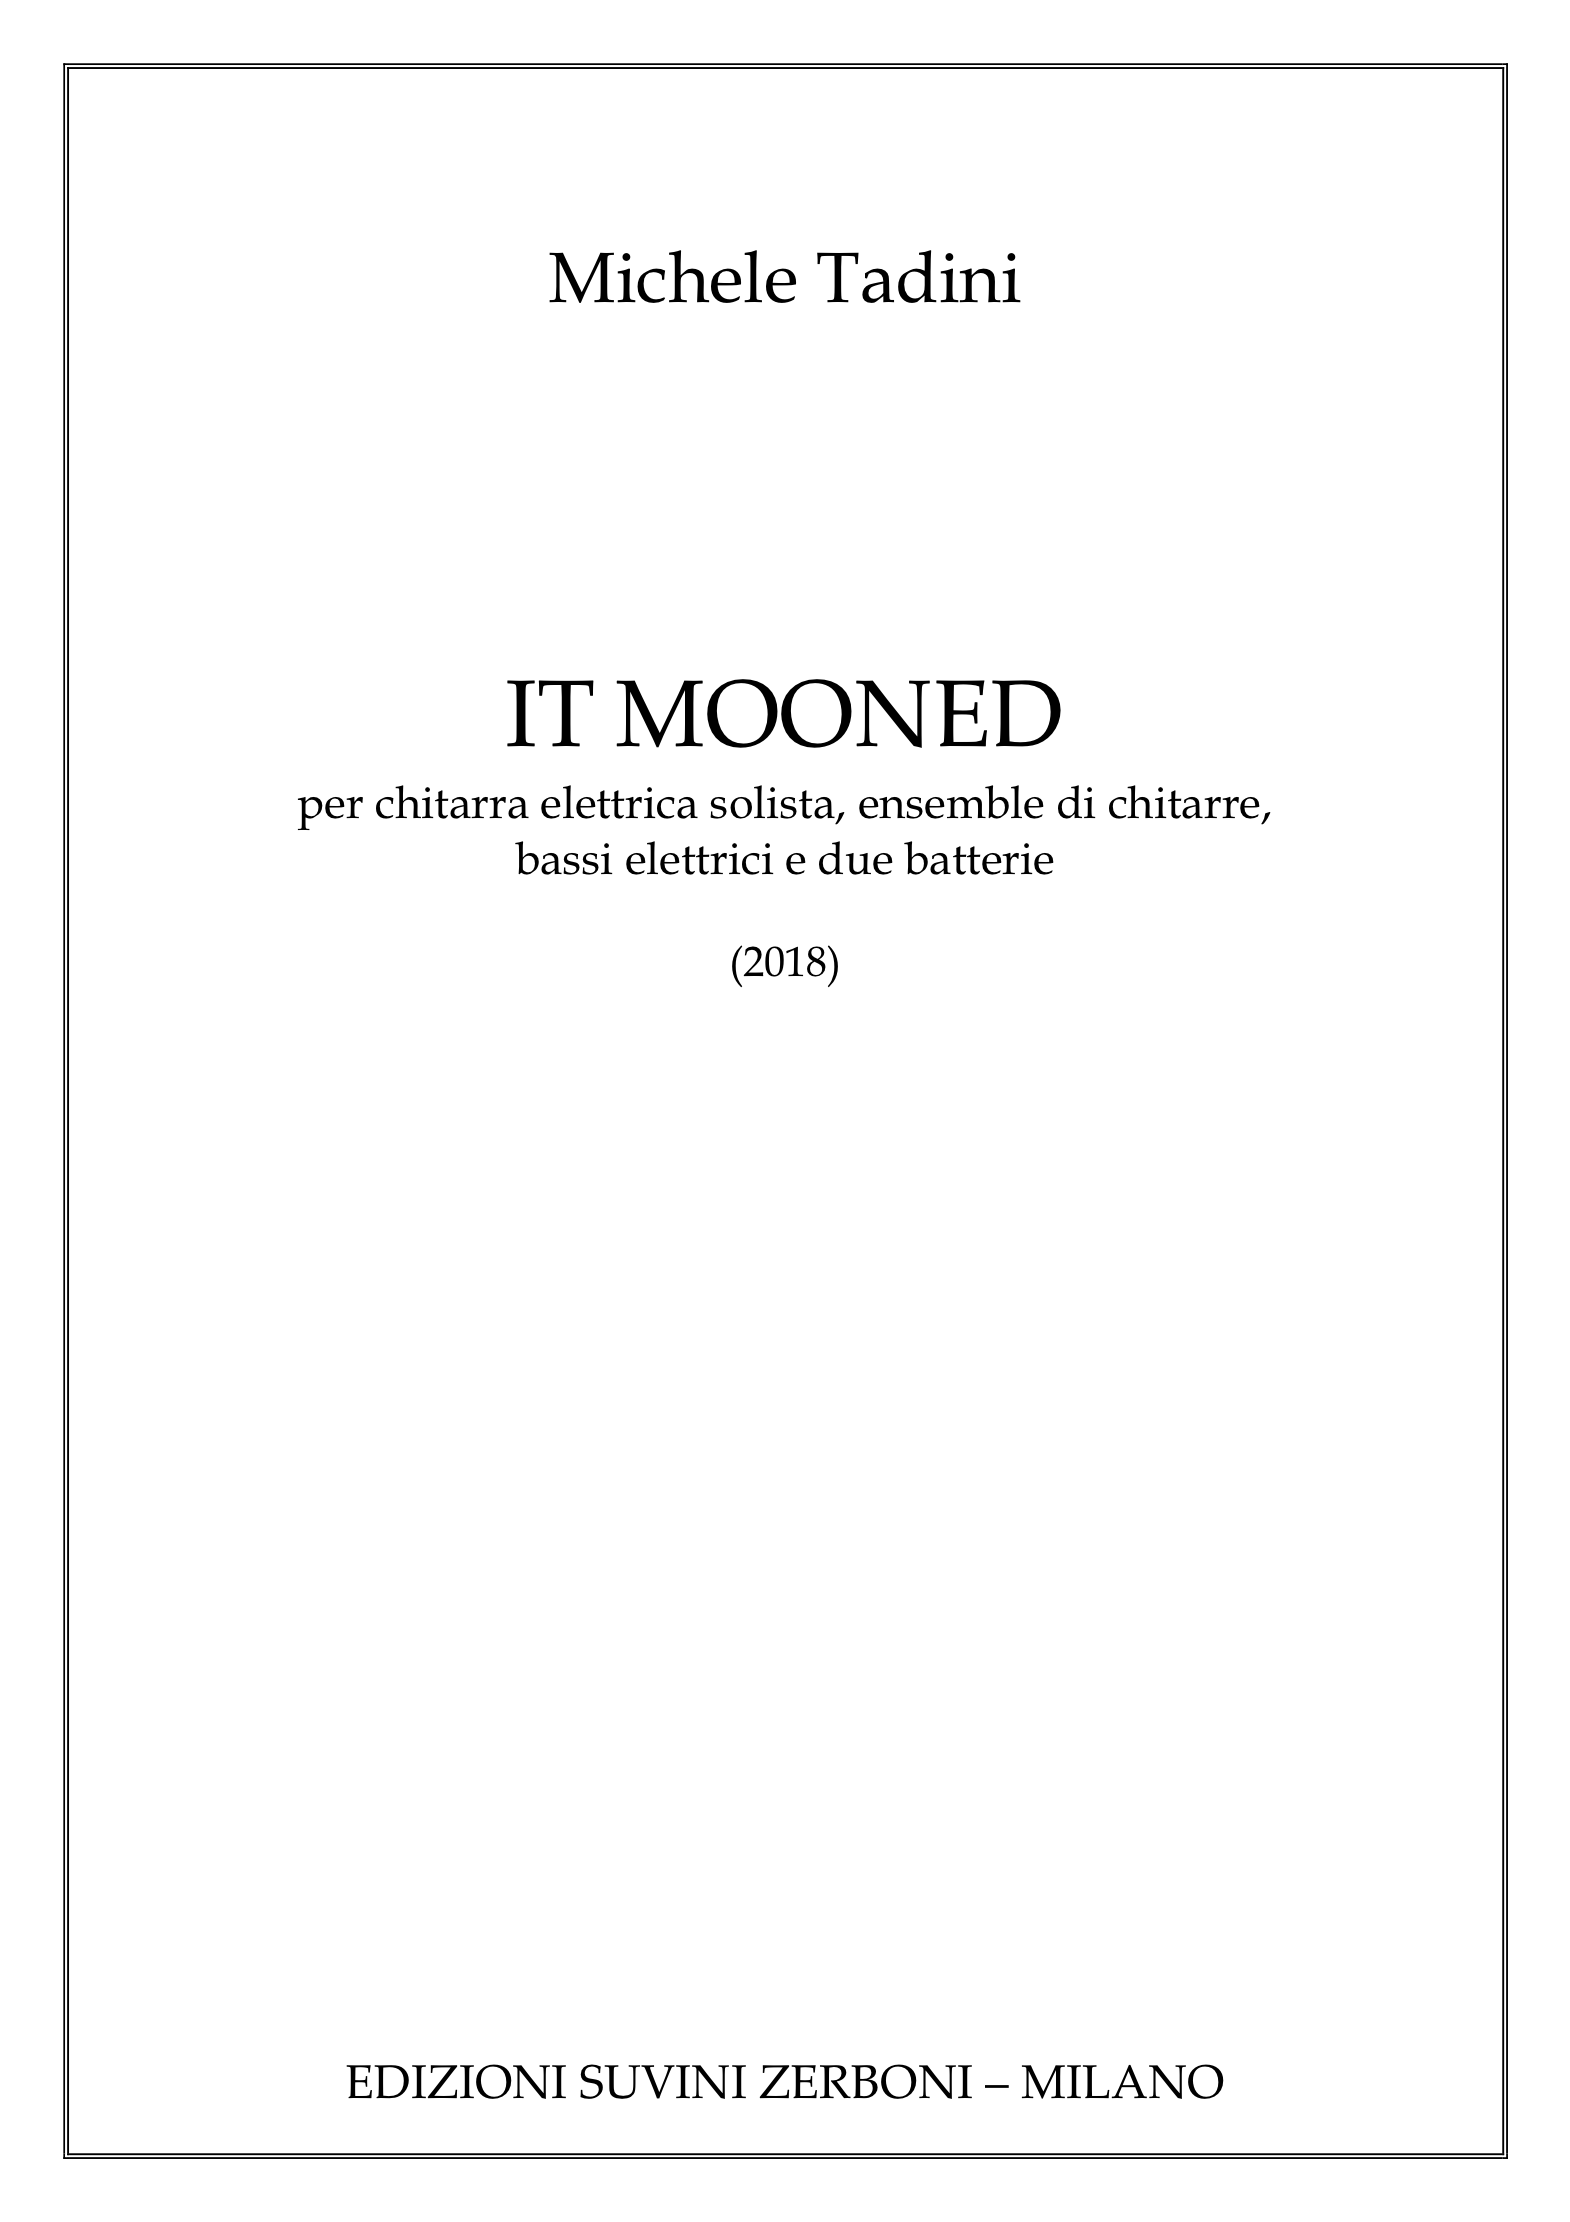 It Mooned_Tadini 1